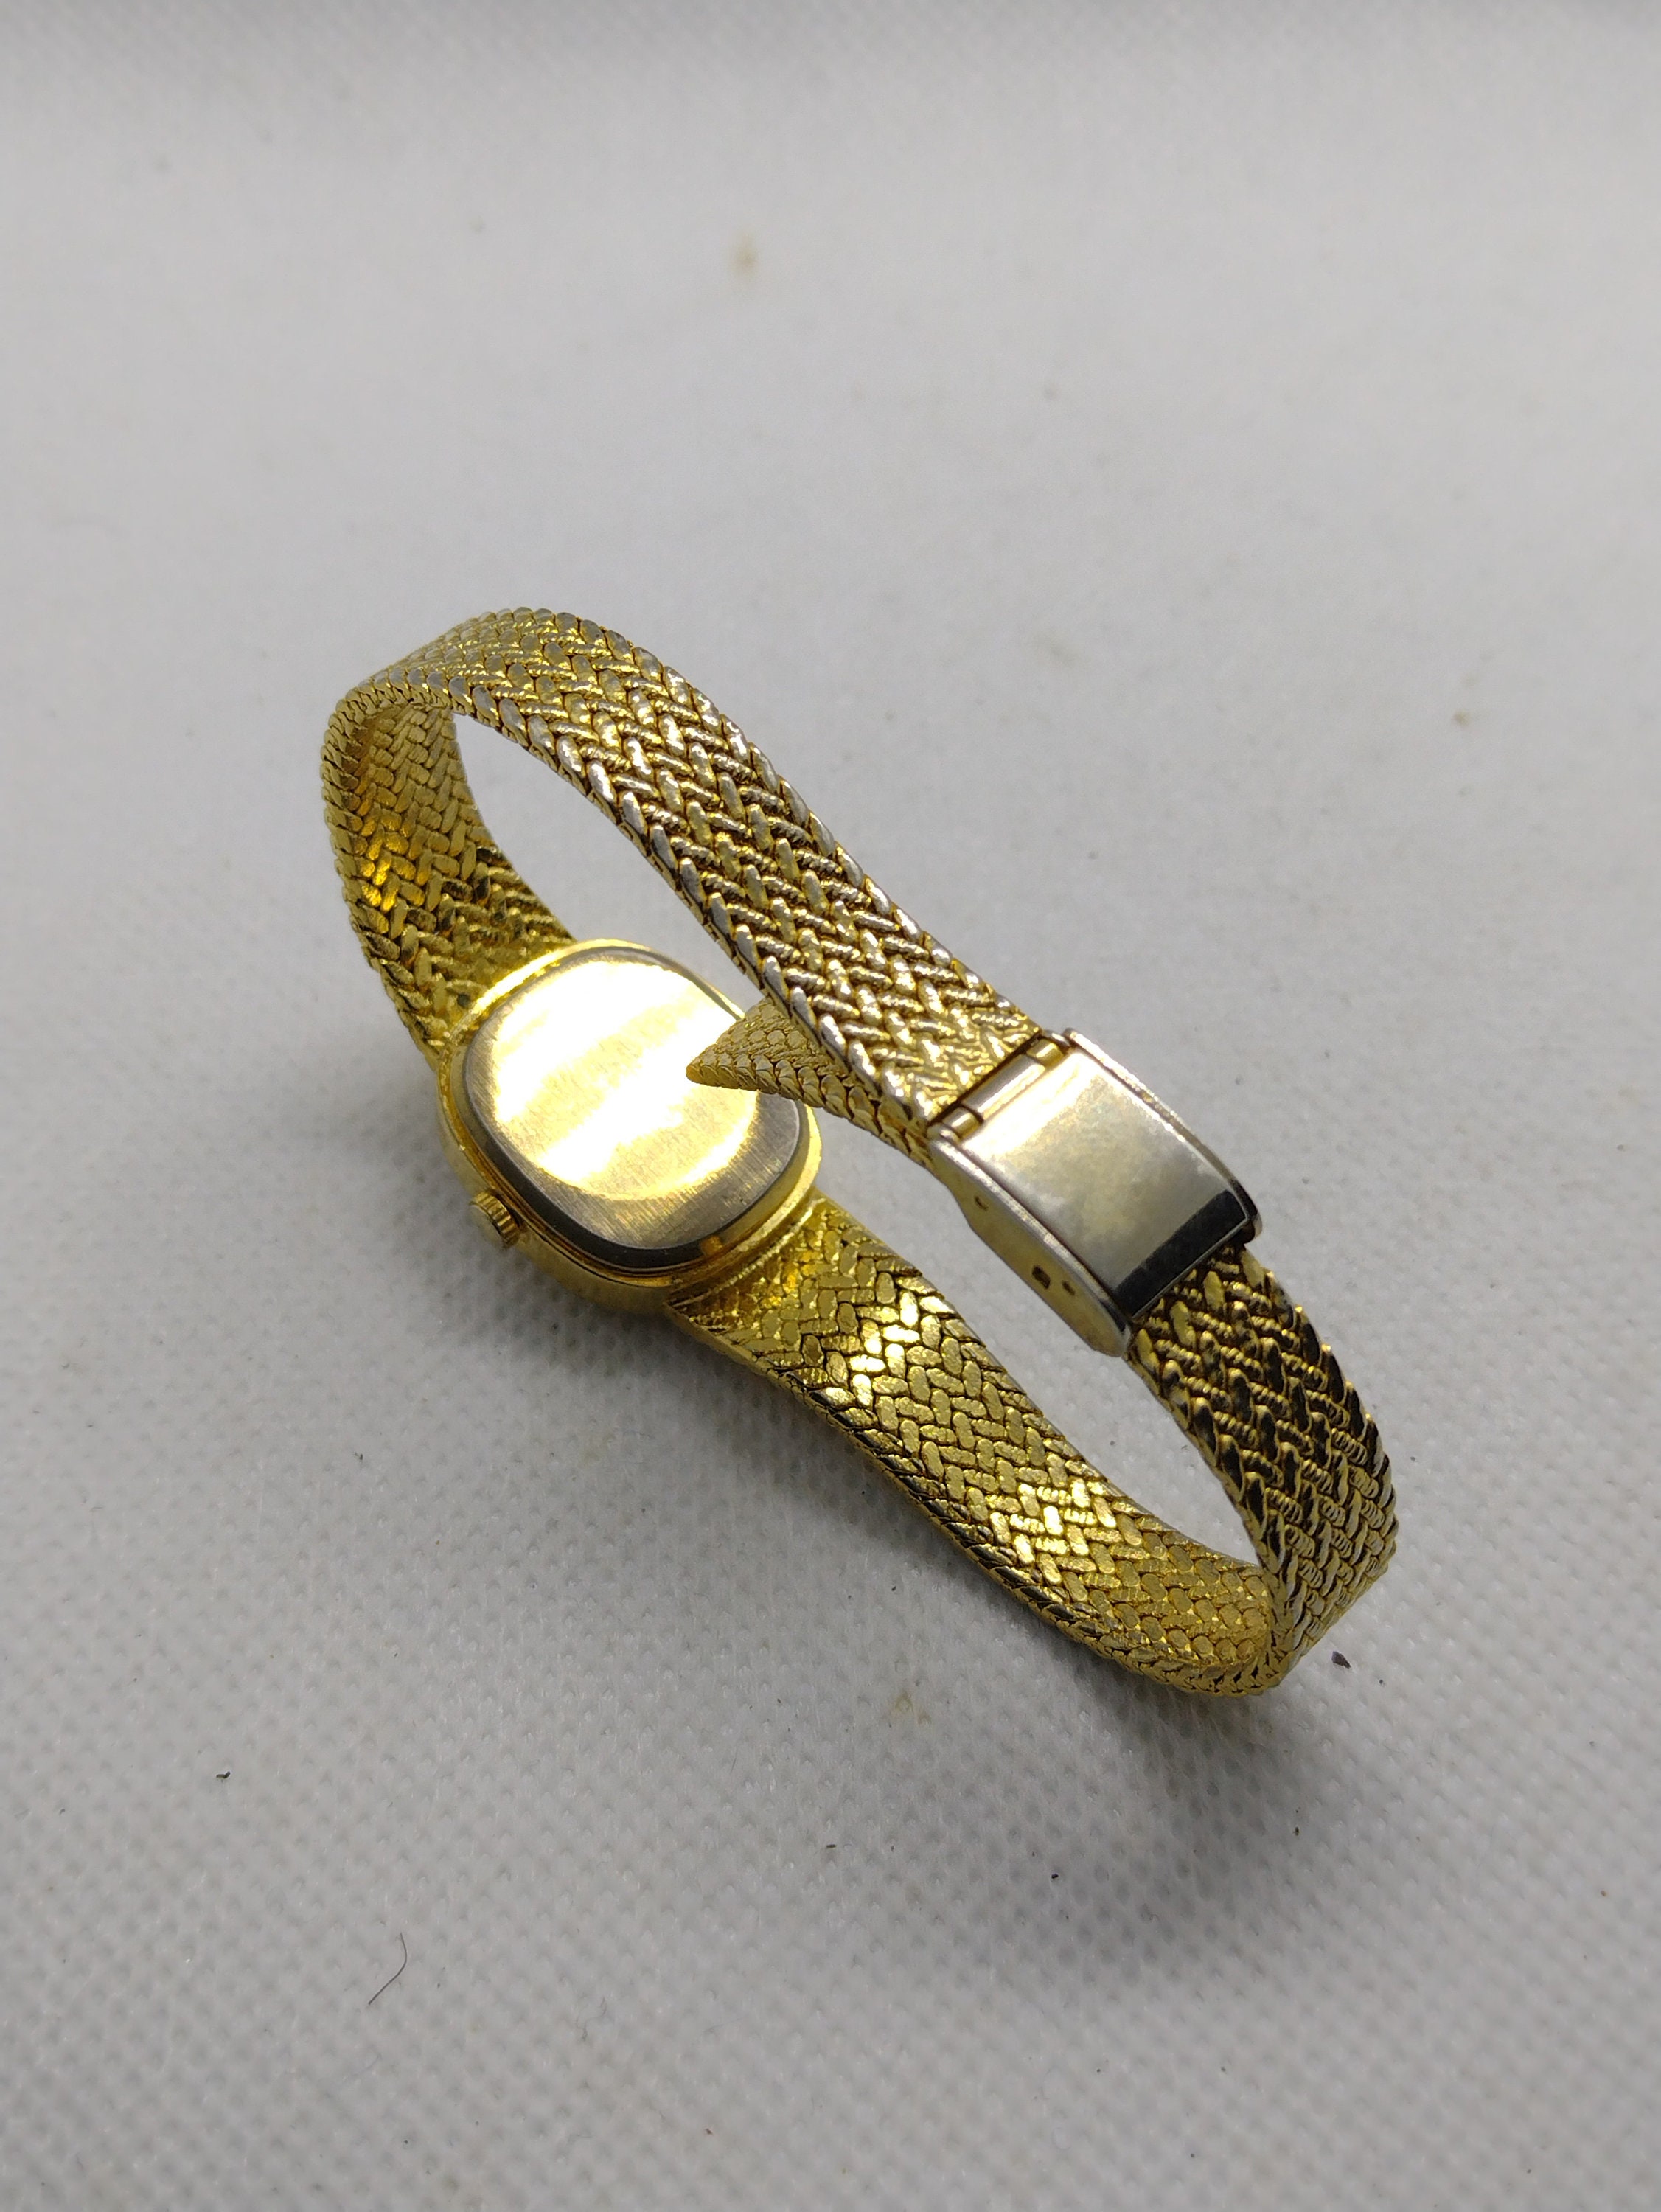 Guess Women'S Imitation Pearl Gold-Tone Multi-Chain Bracelet Watch 30X26Mm  U0140L2 in Metallic | Lyst